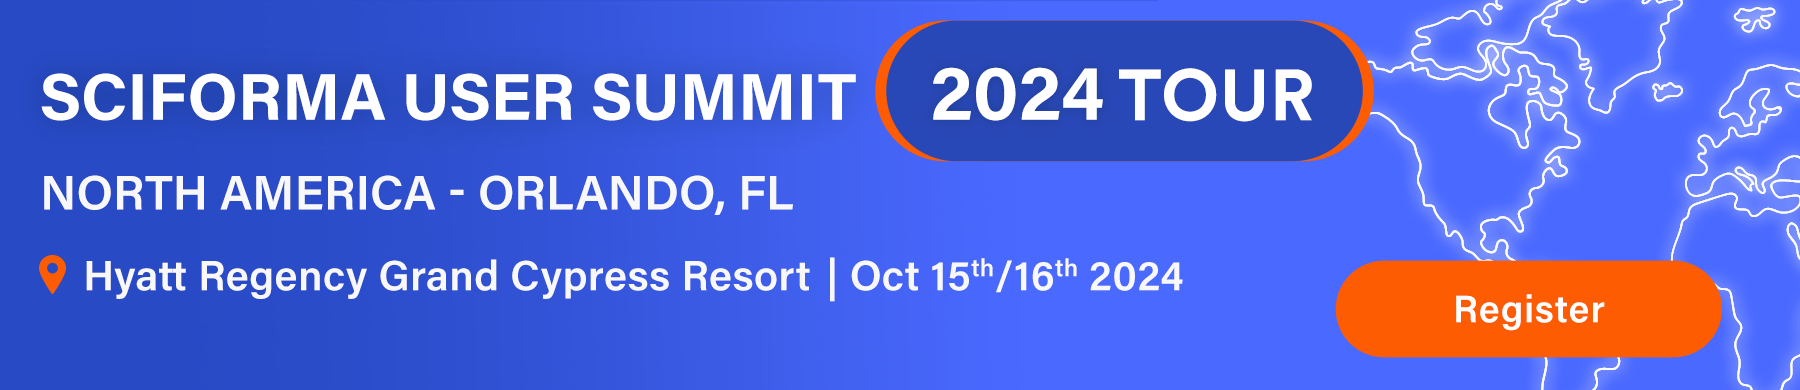 Sciforma User Summit 2024 US